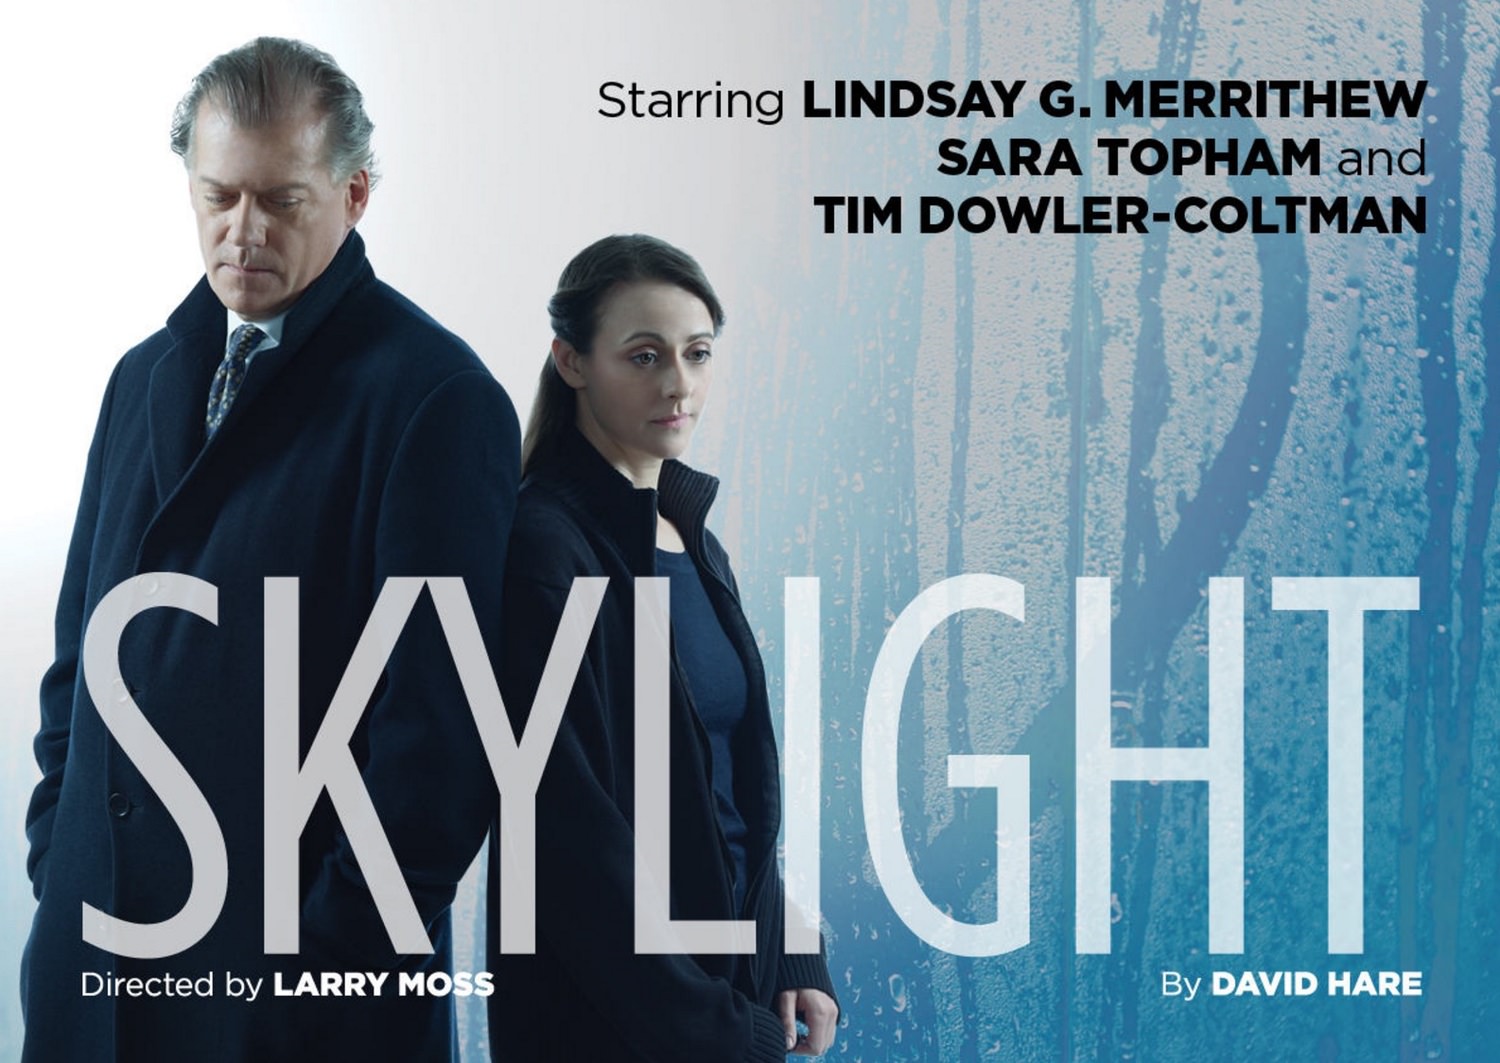 Lindsay G. Merrithew and Sara Topham in David Hare's 'Skylight'. 1